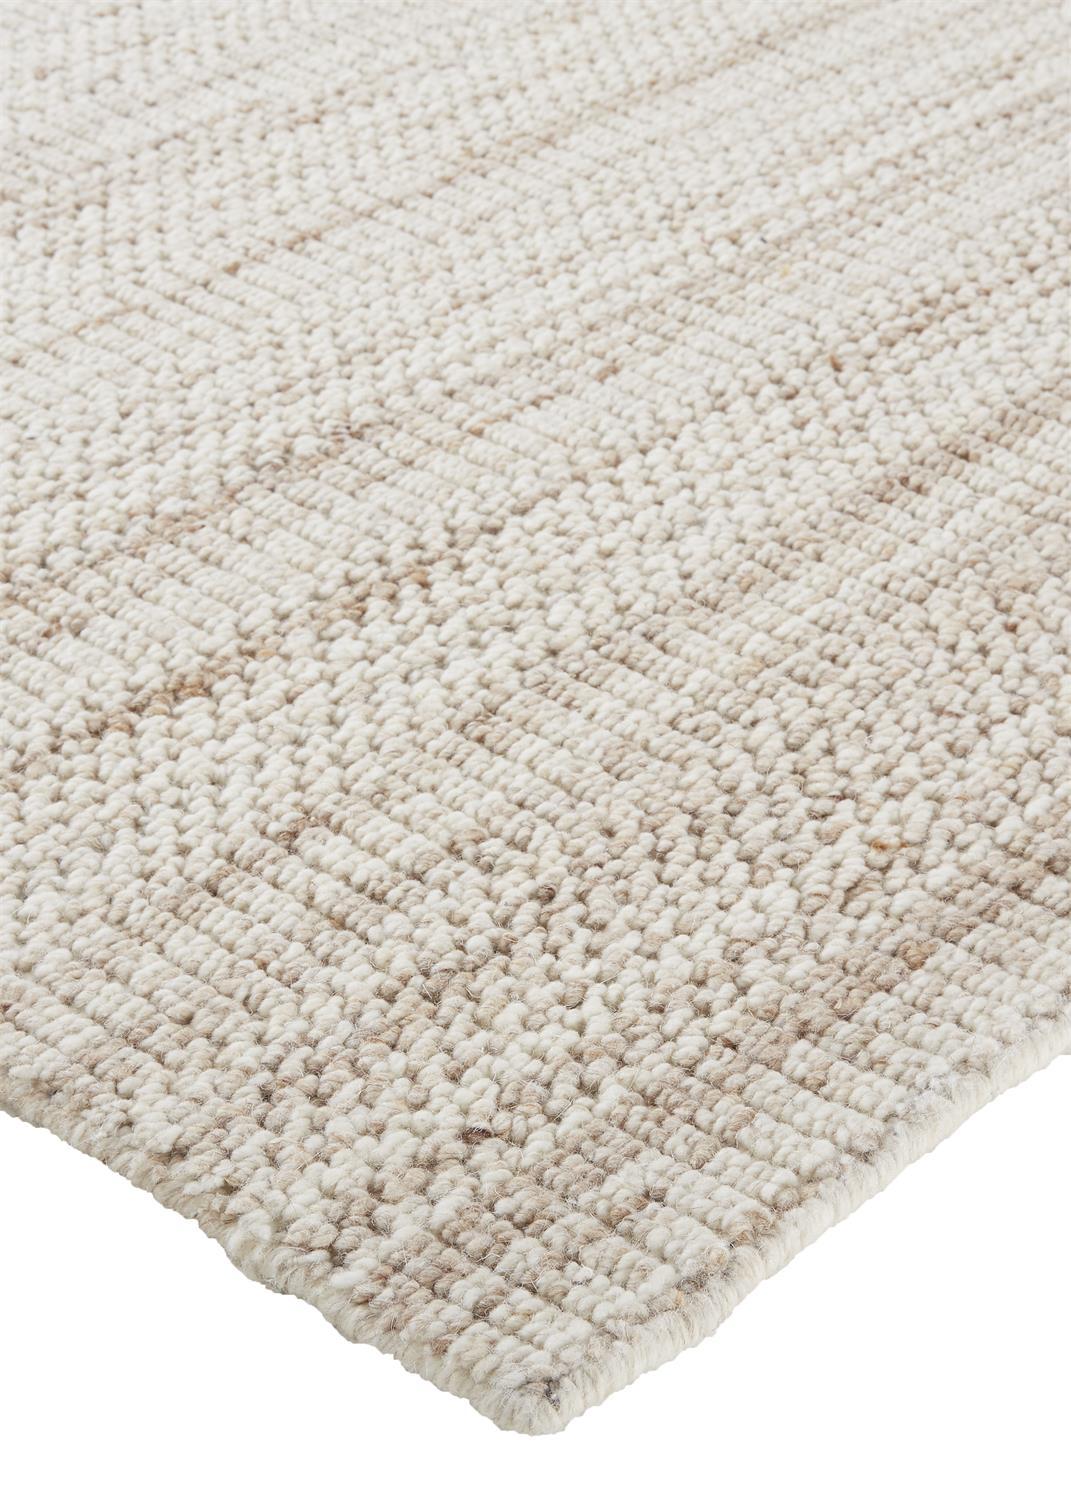 Feizy Feizy Keaton Handmade Wool Neutral Stripe Rug - Tan & Beige - Available in 6 Sizes